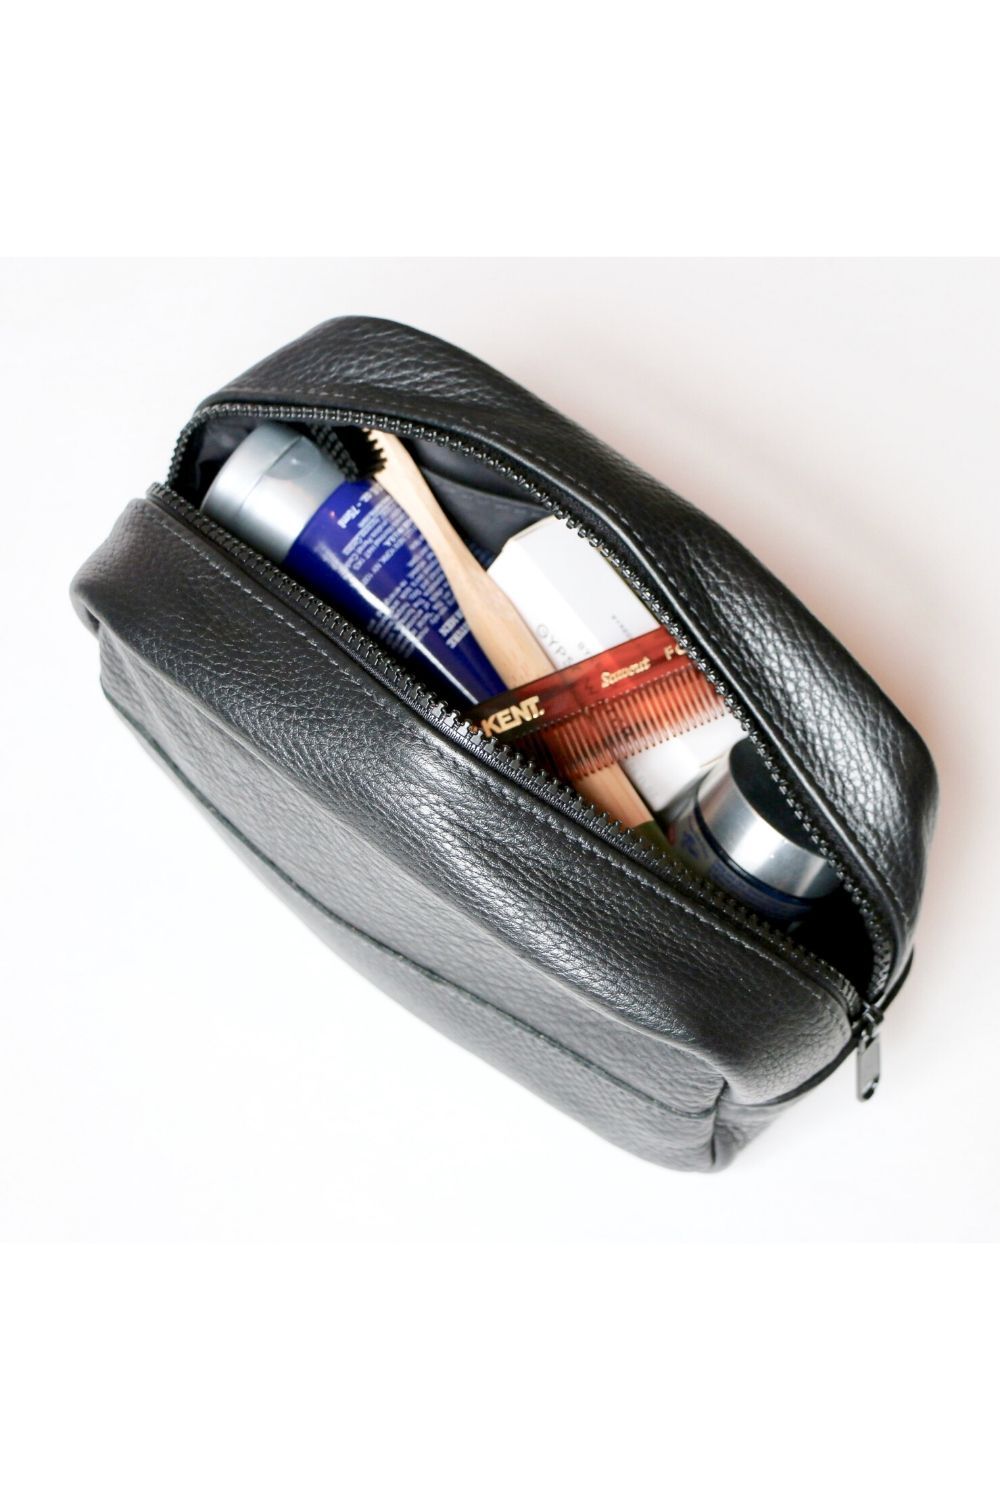 The Toiletry Bag - 'Dopp Kit' or 'Wash Bag' – MAHI Leather